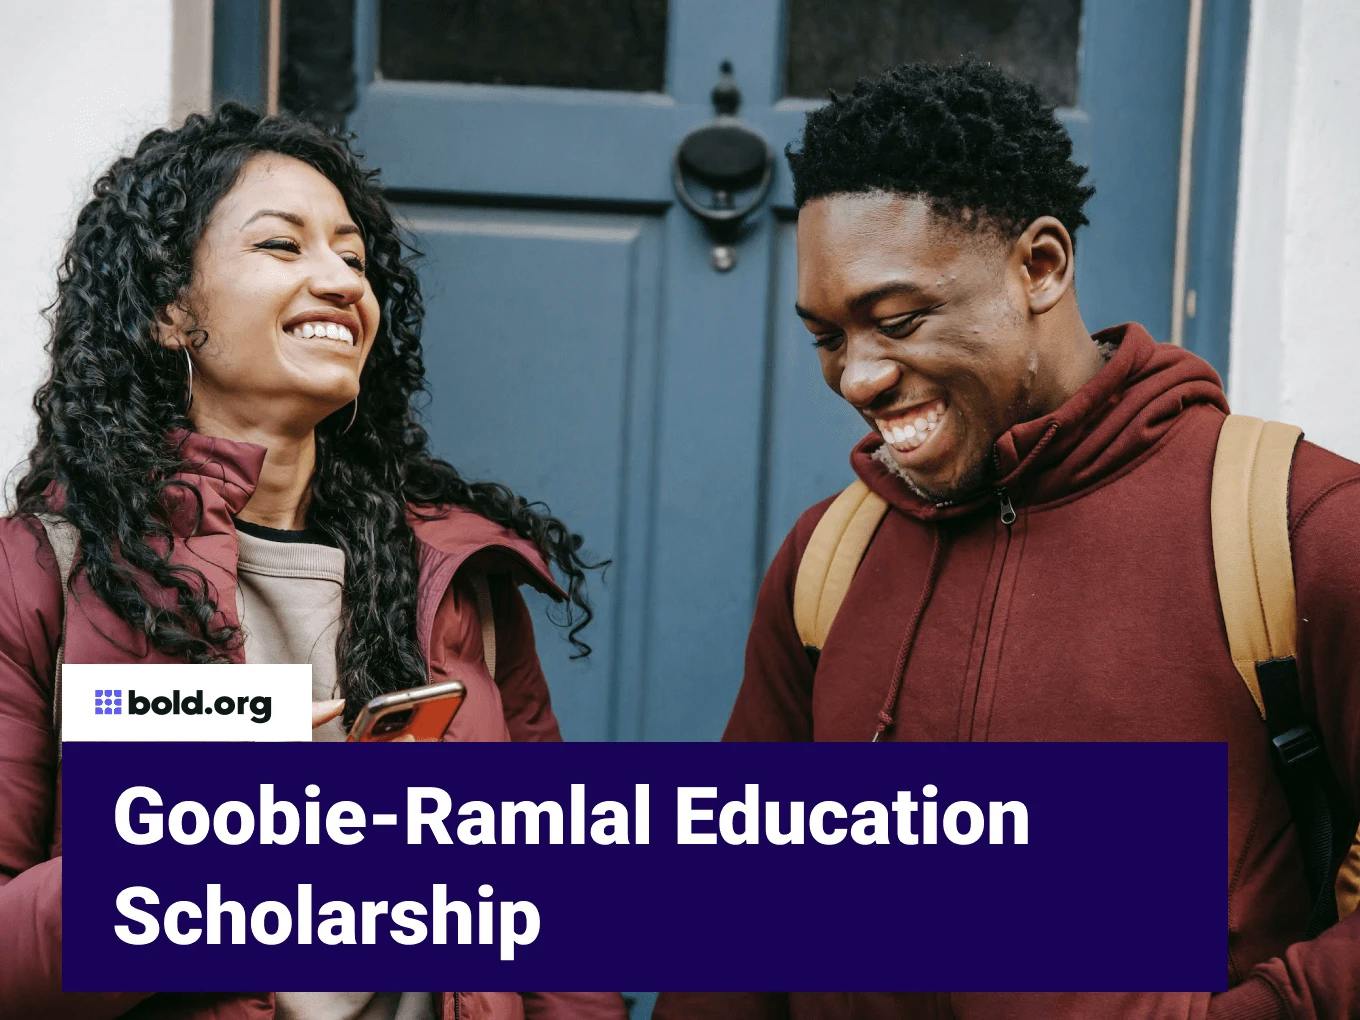 Goobie-Ramlal Education Scholarship